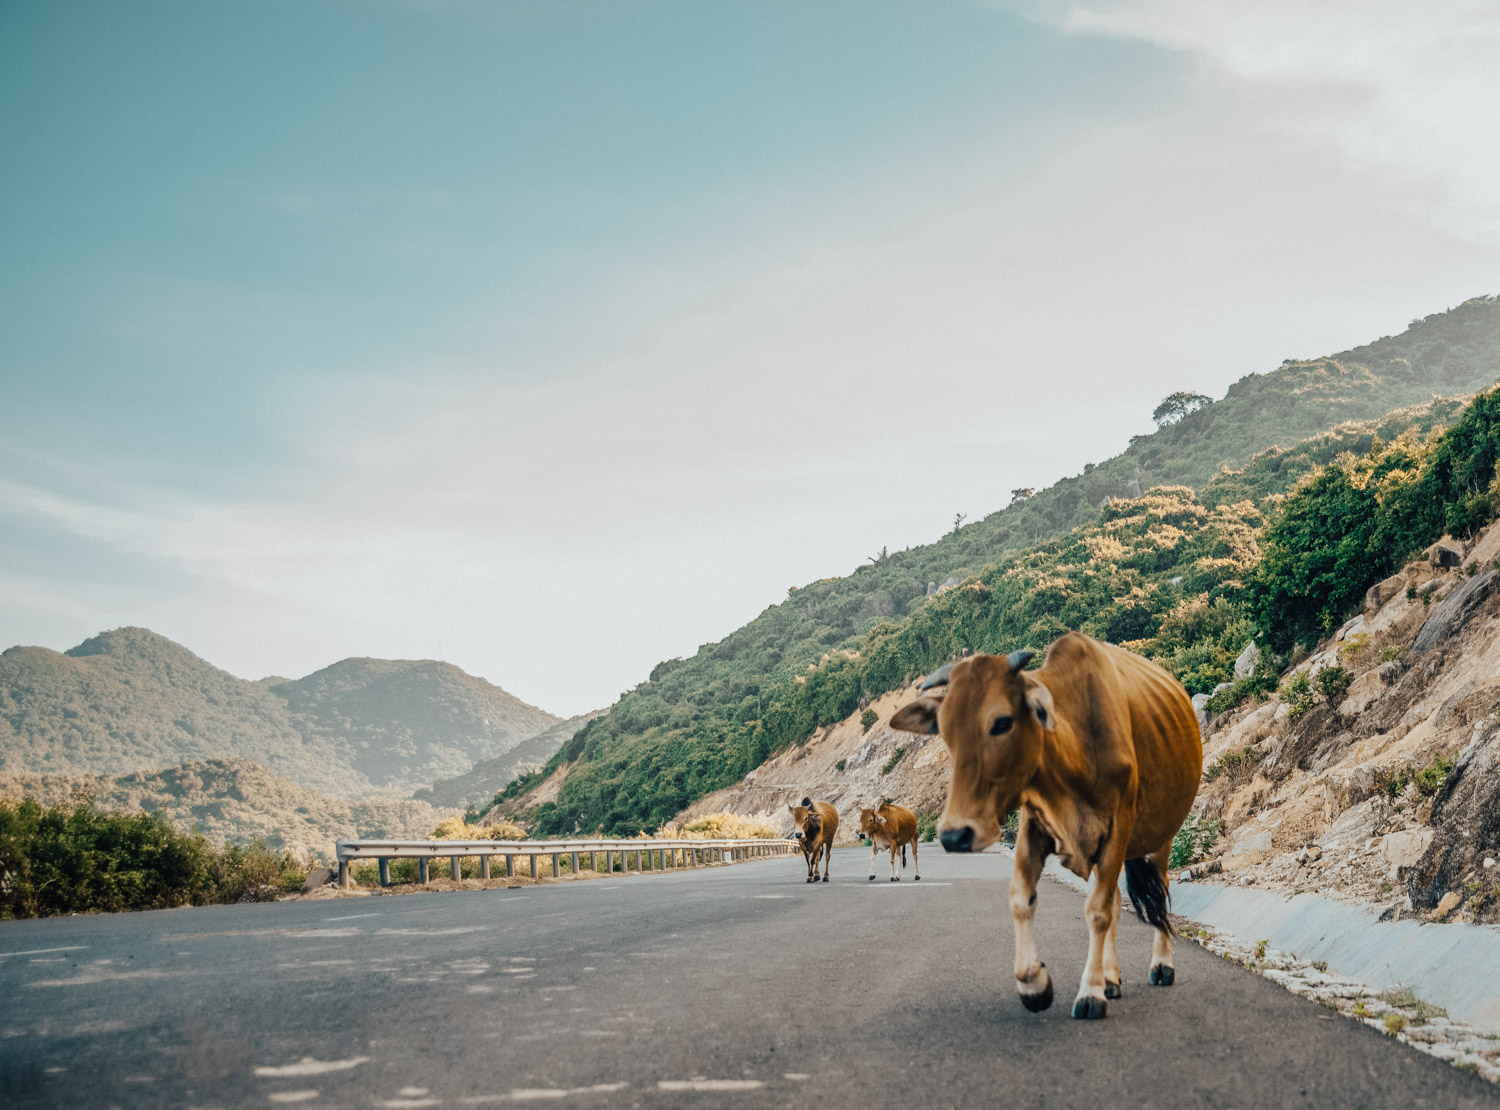 Cows walking on the road in Phu Yen, Vietnam